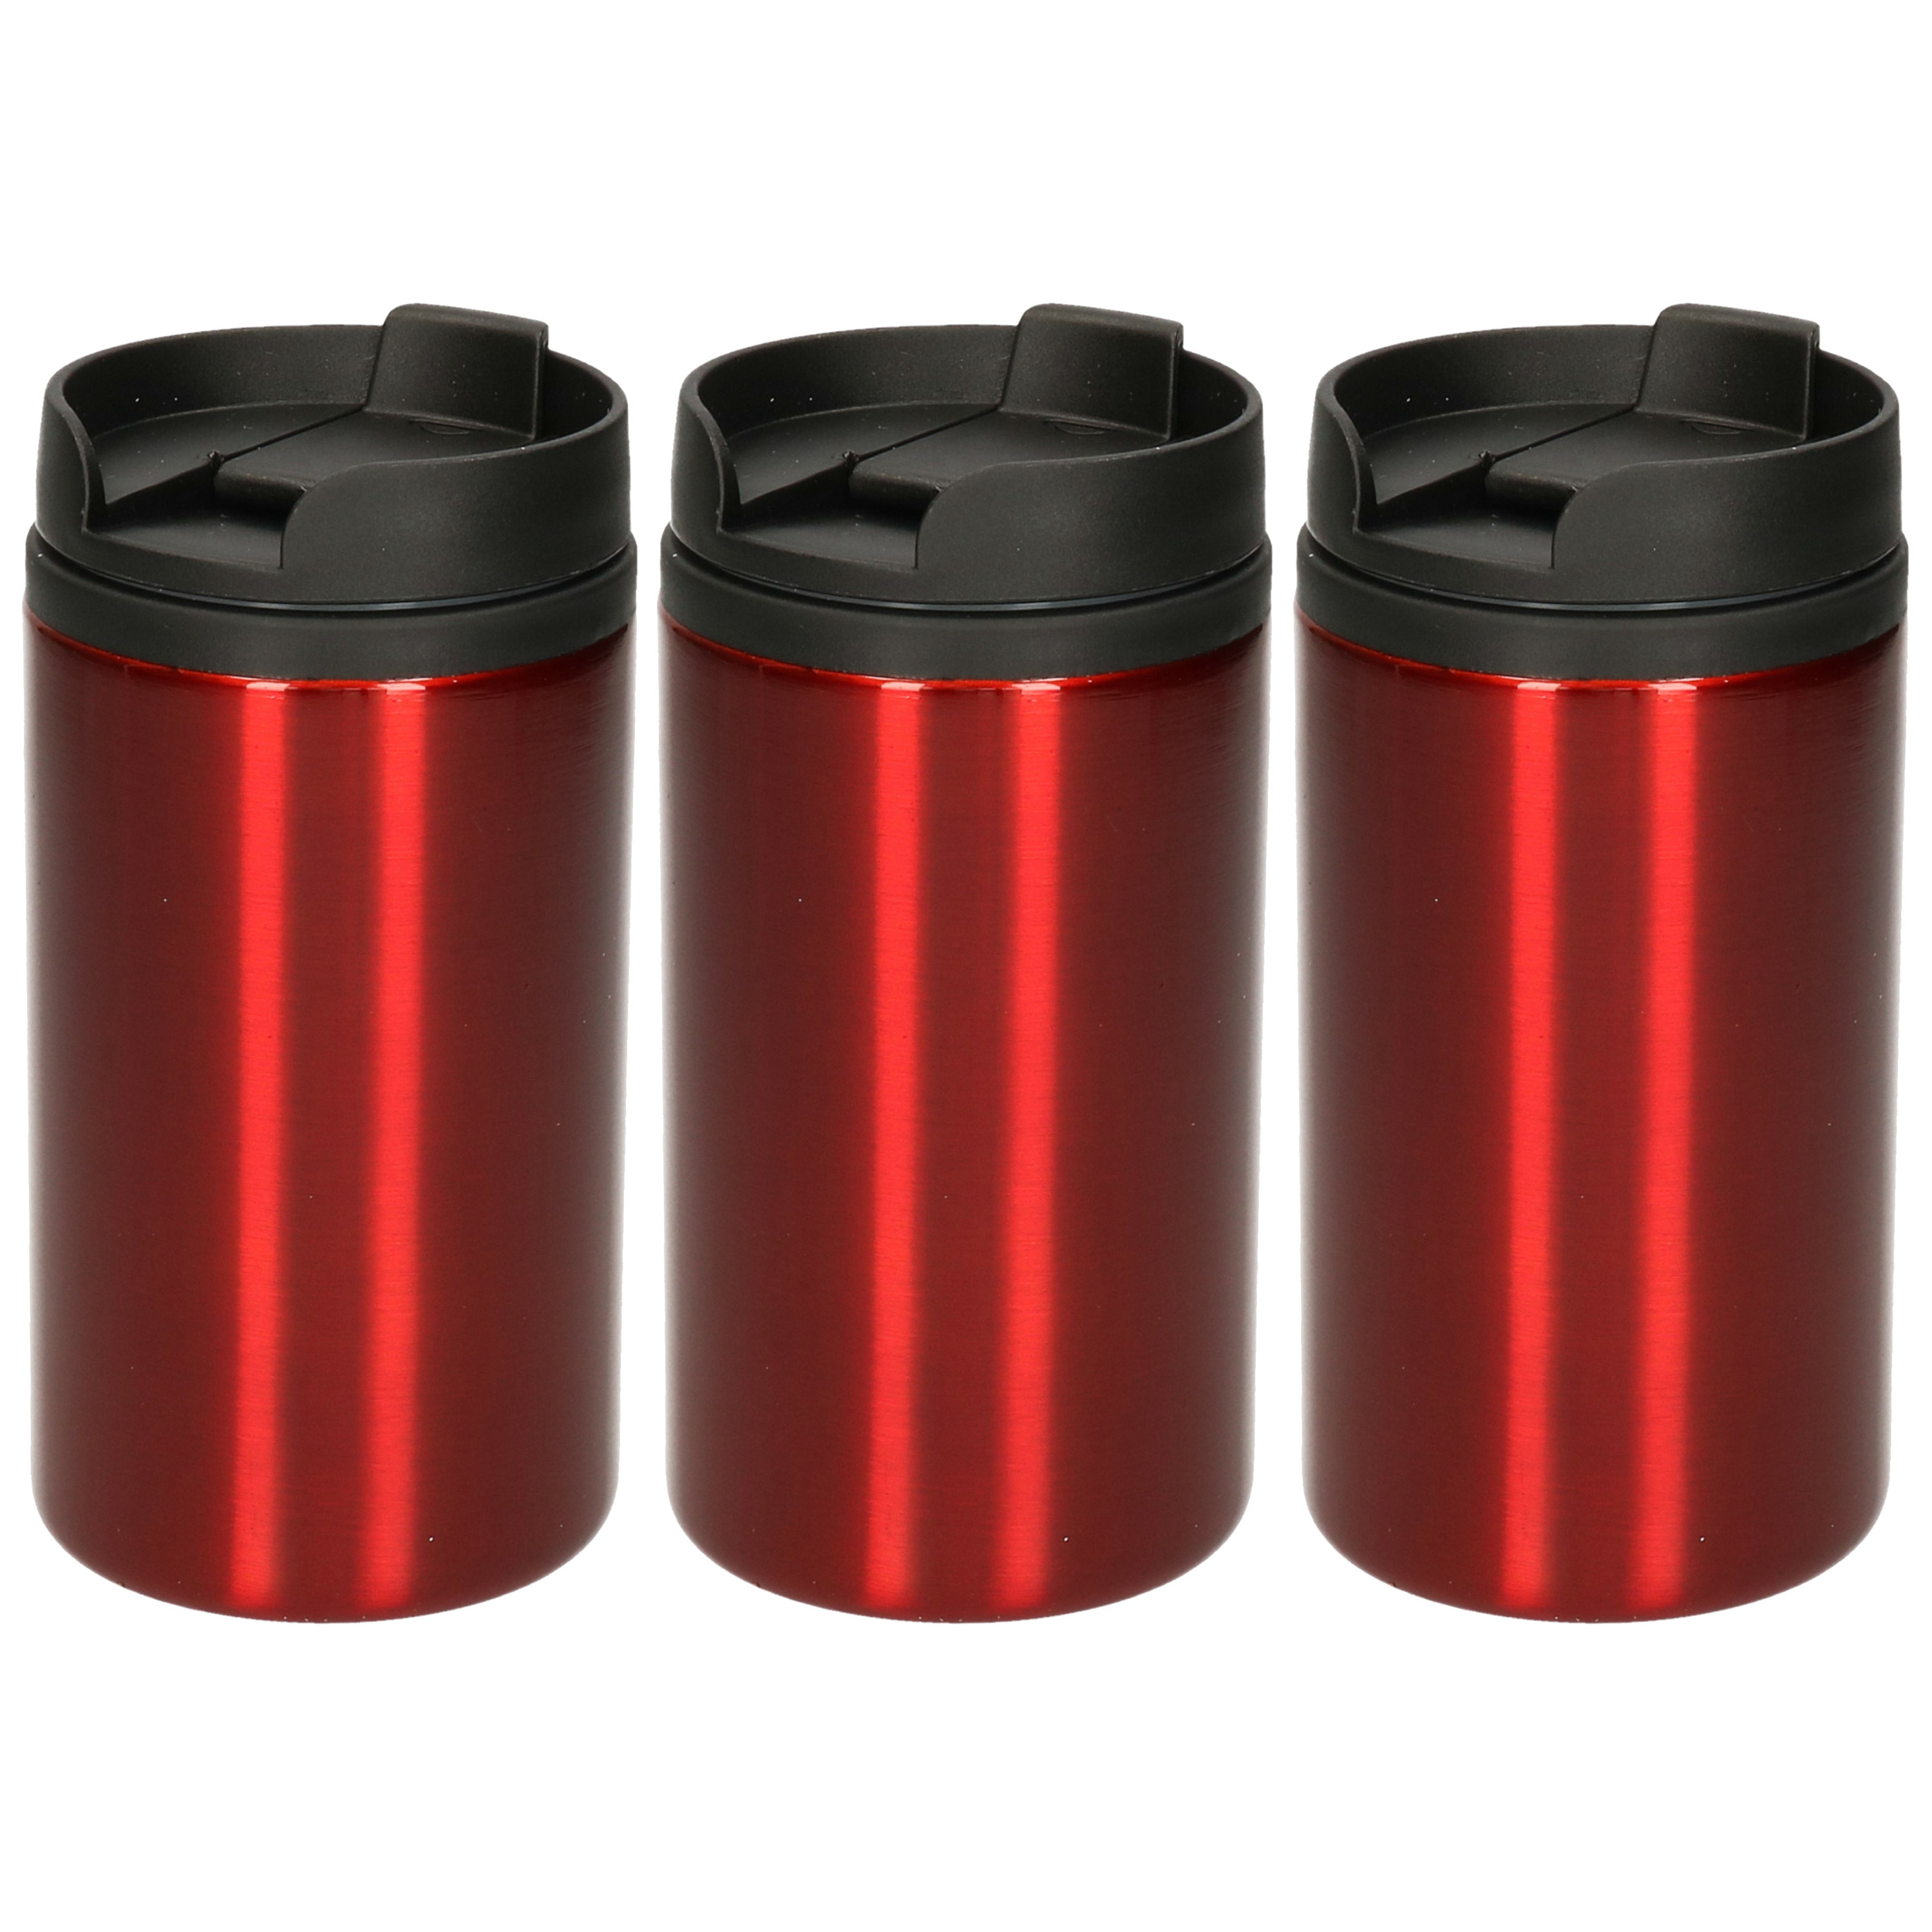 3x Isoleerbekers RVS metallic rood 320 ml